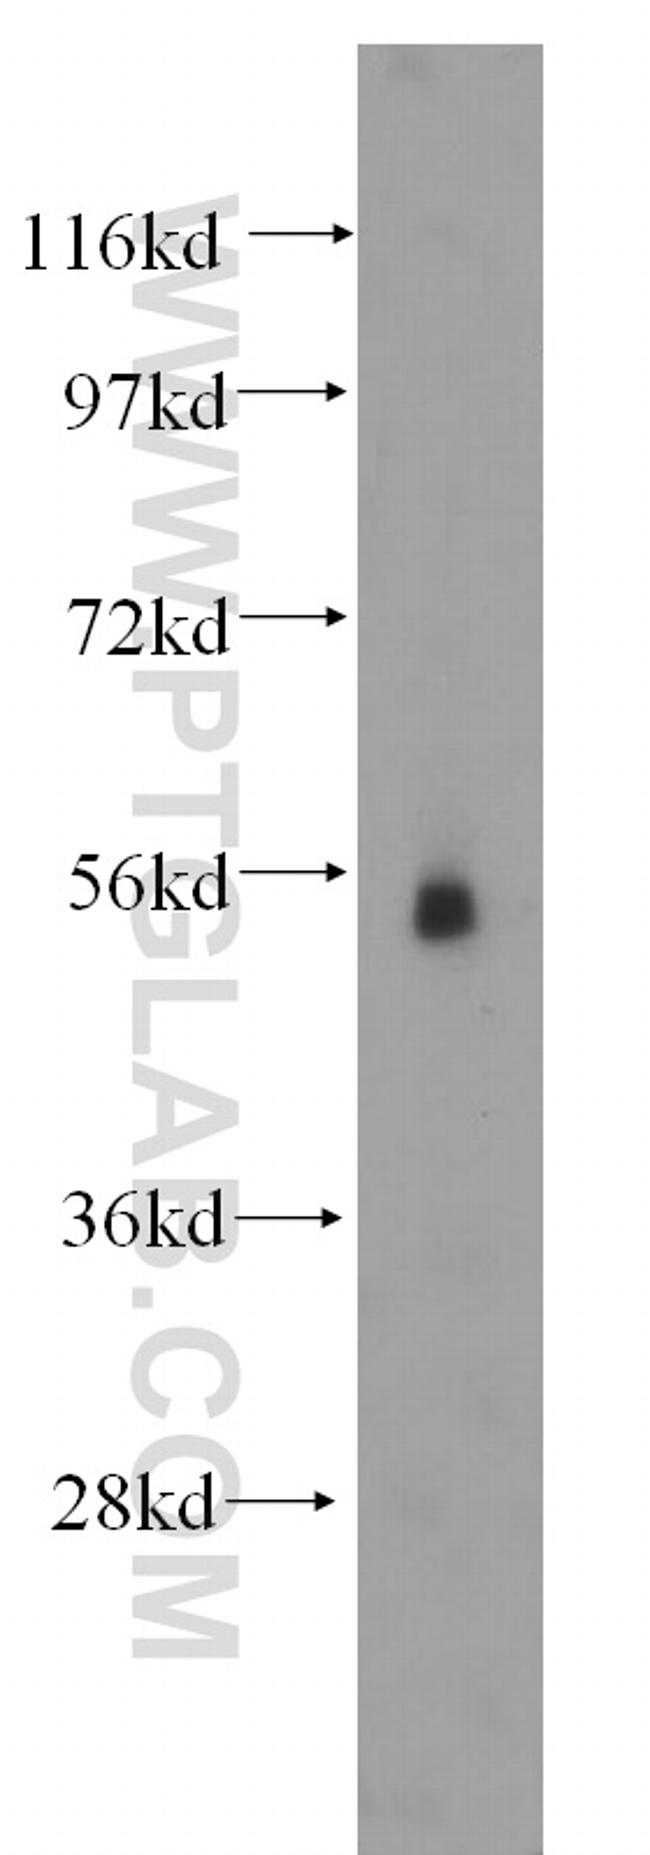 FUCA2 Antibody in Western Blot (WB)